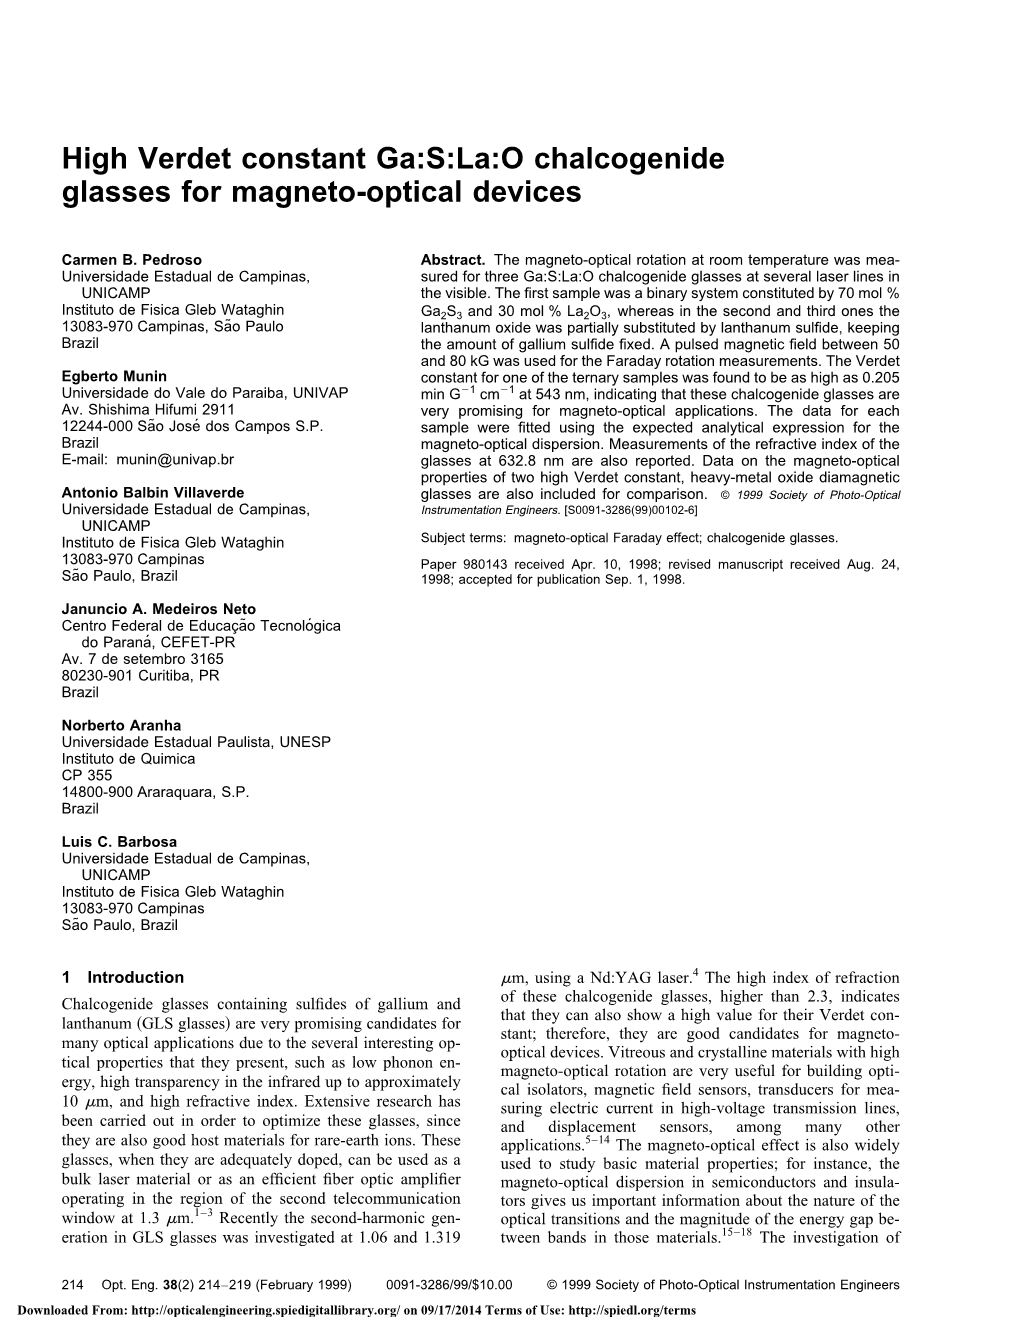 High Verdet Constant Ga:S:La:O Chalcogenide Glasses for Magneto-Optical Devices